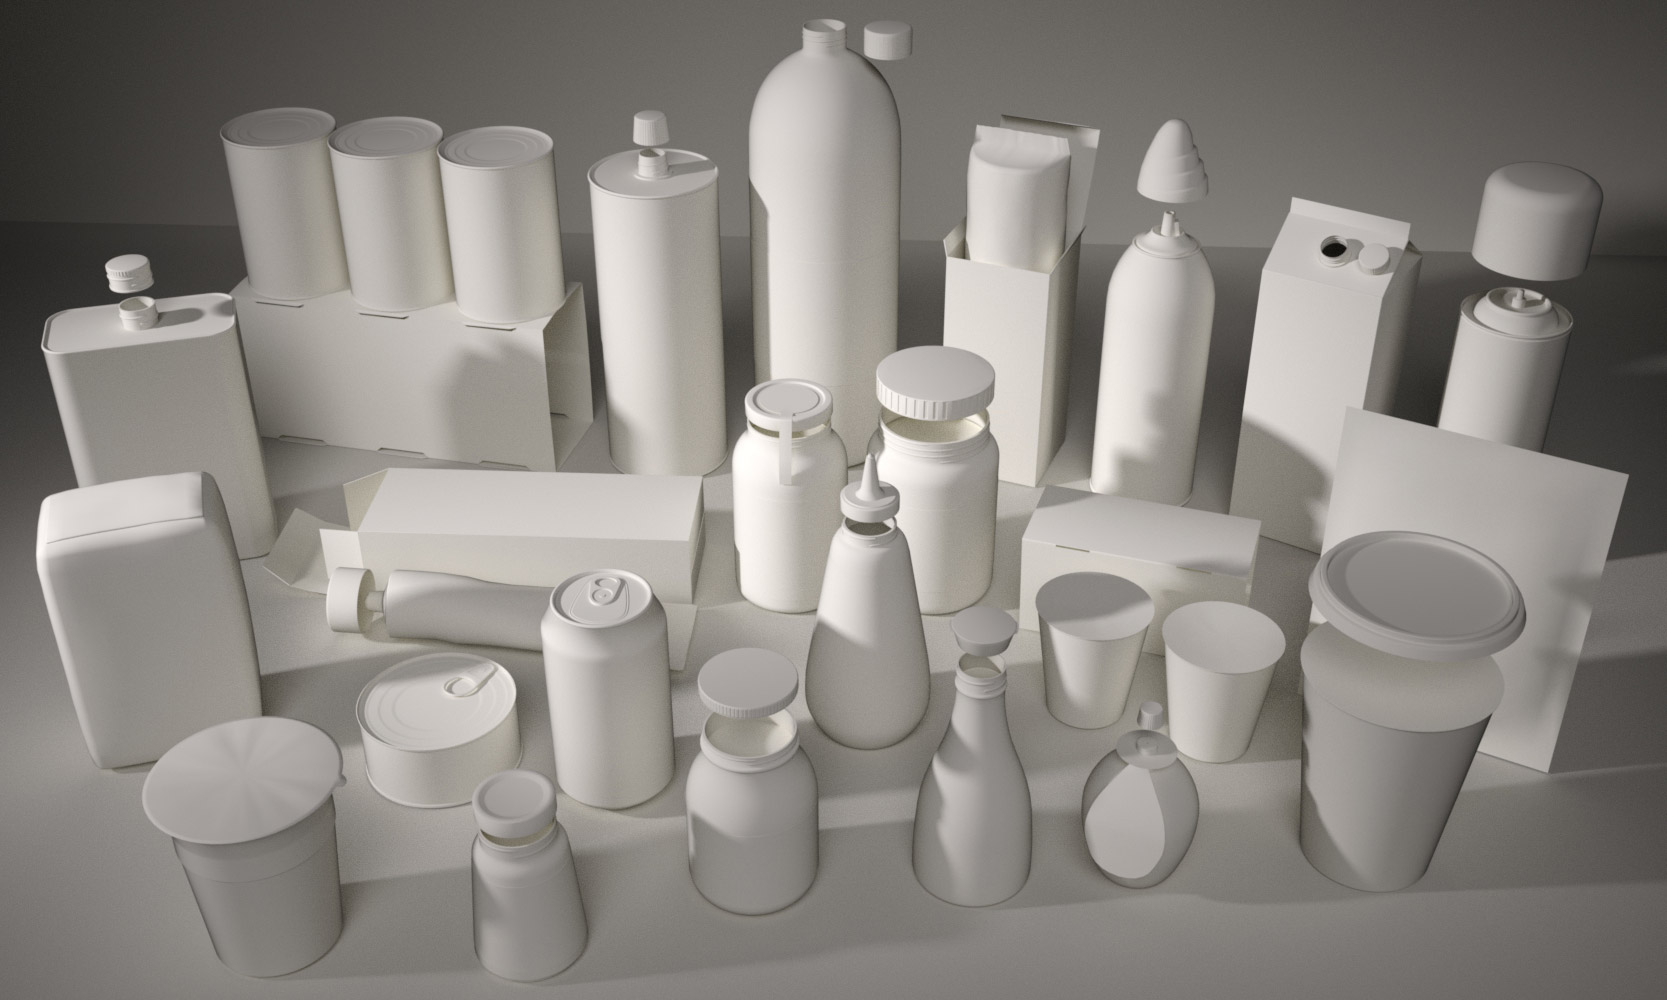 Everyday Groceries 2 by: maclean, 3D Models by Daz 3D